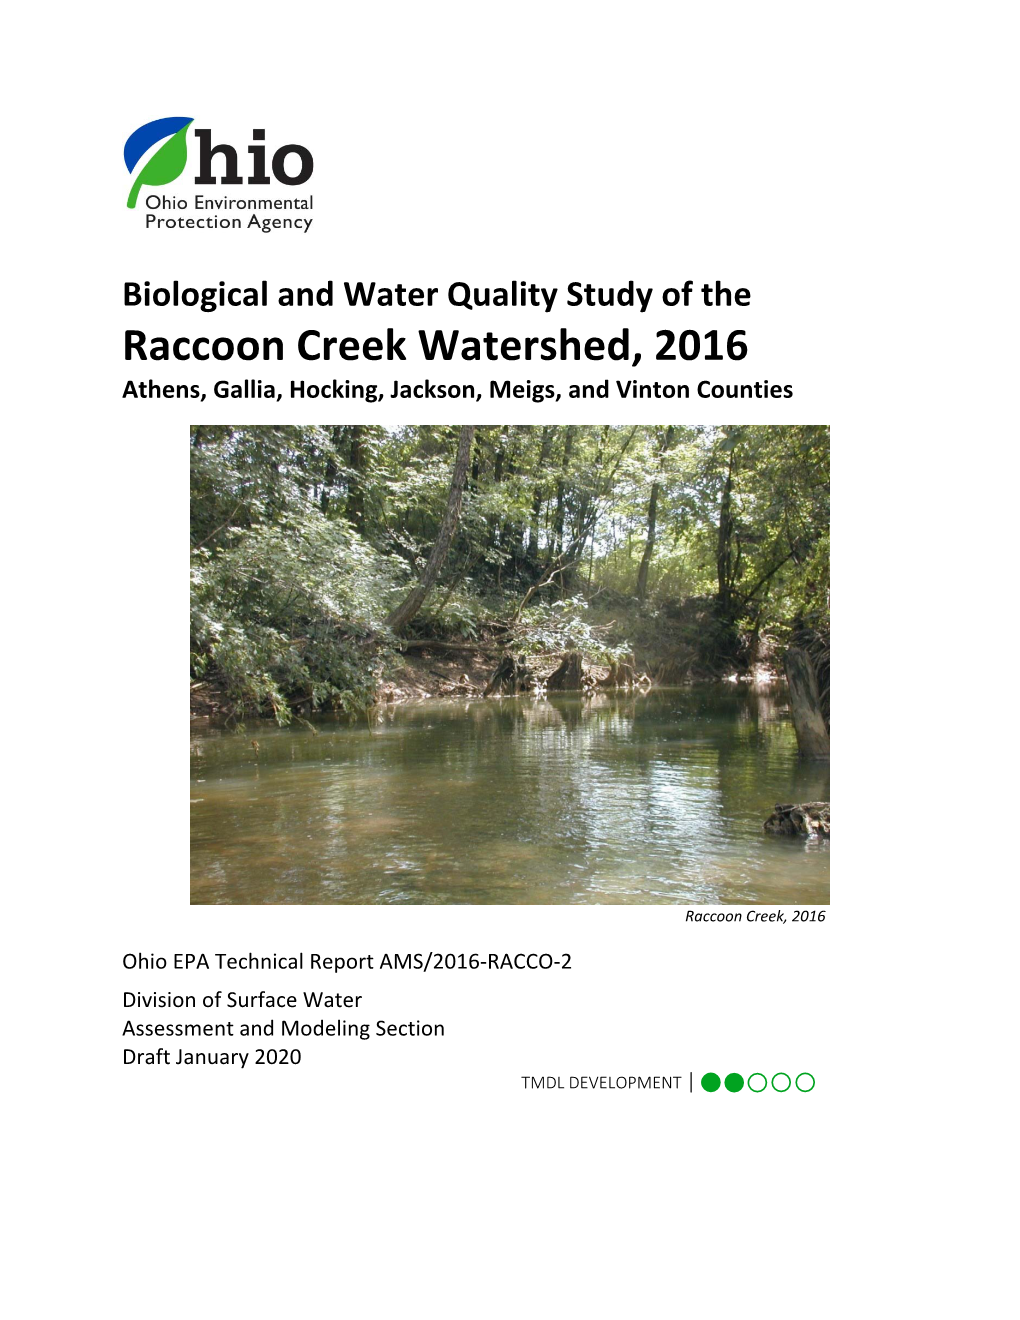 Raccoon Creek Watershed, 2016 Athens, Gallia, Hocking, Jackson, Meigs, and Vinton Counties